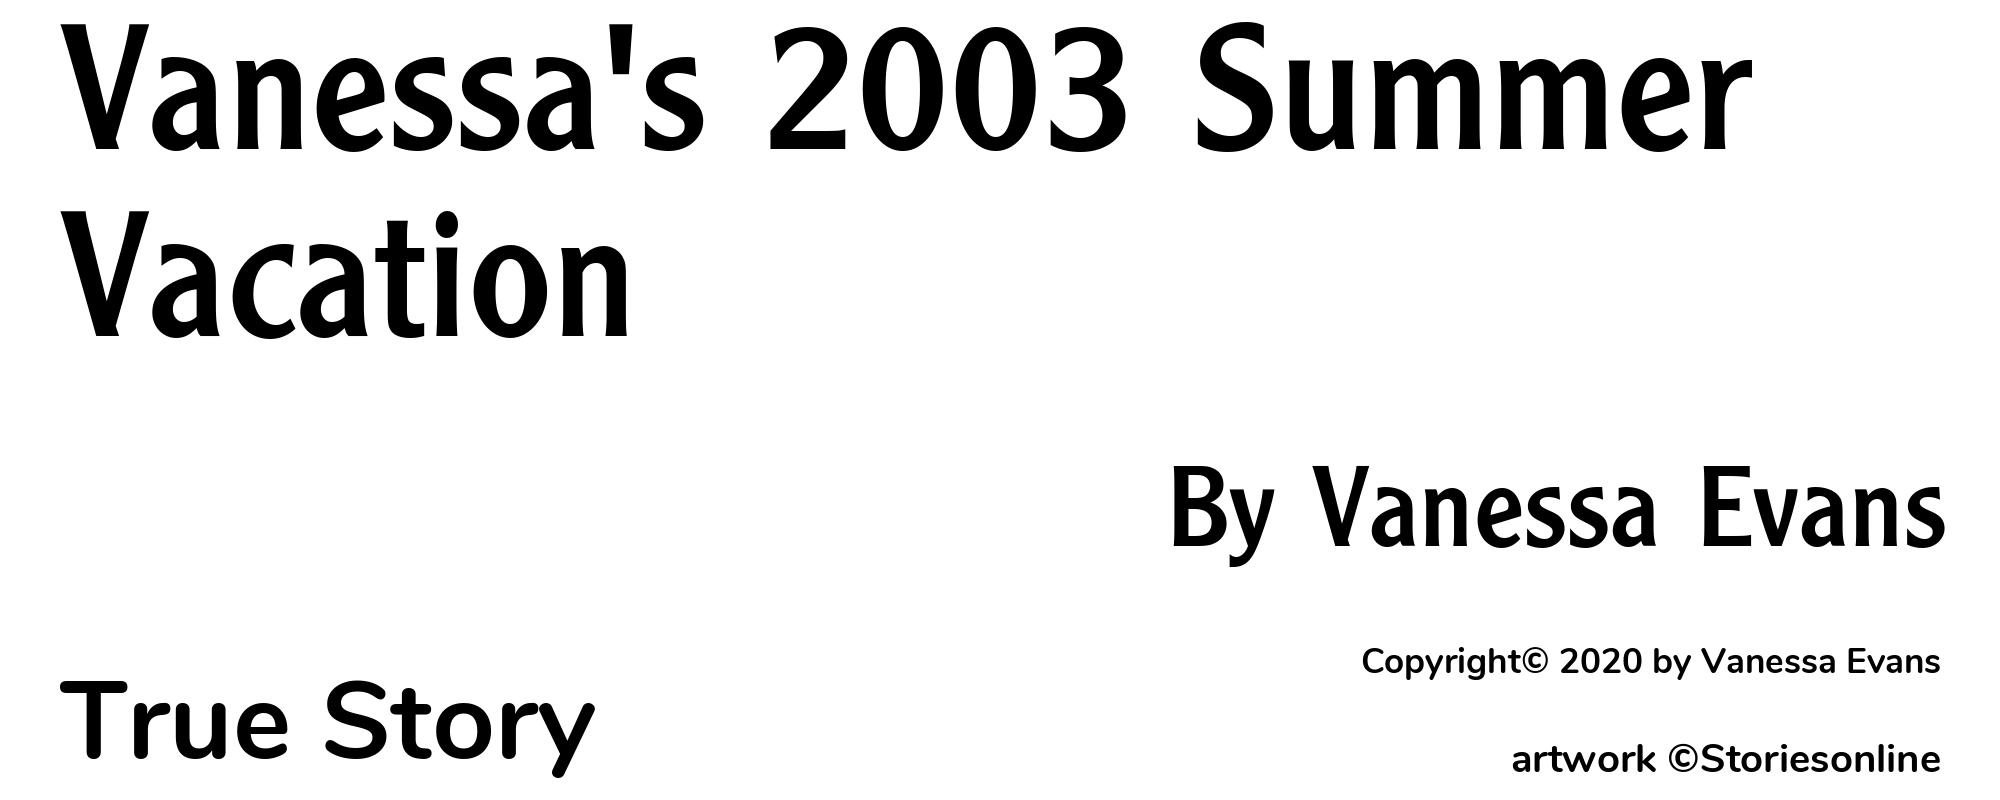 Vanessa's 2003 Summer Vacation - Cover